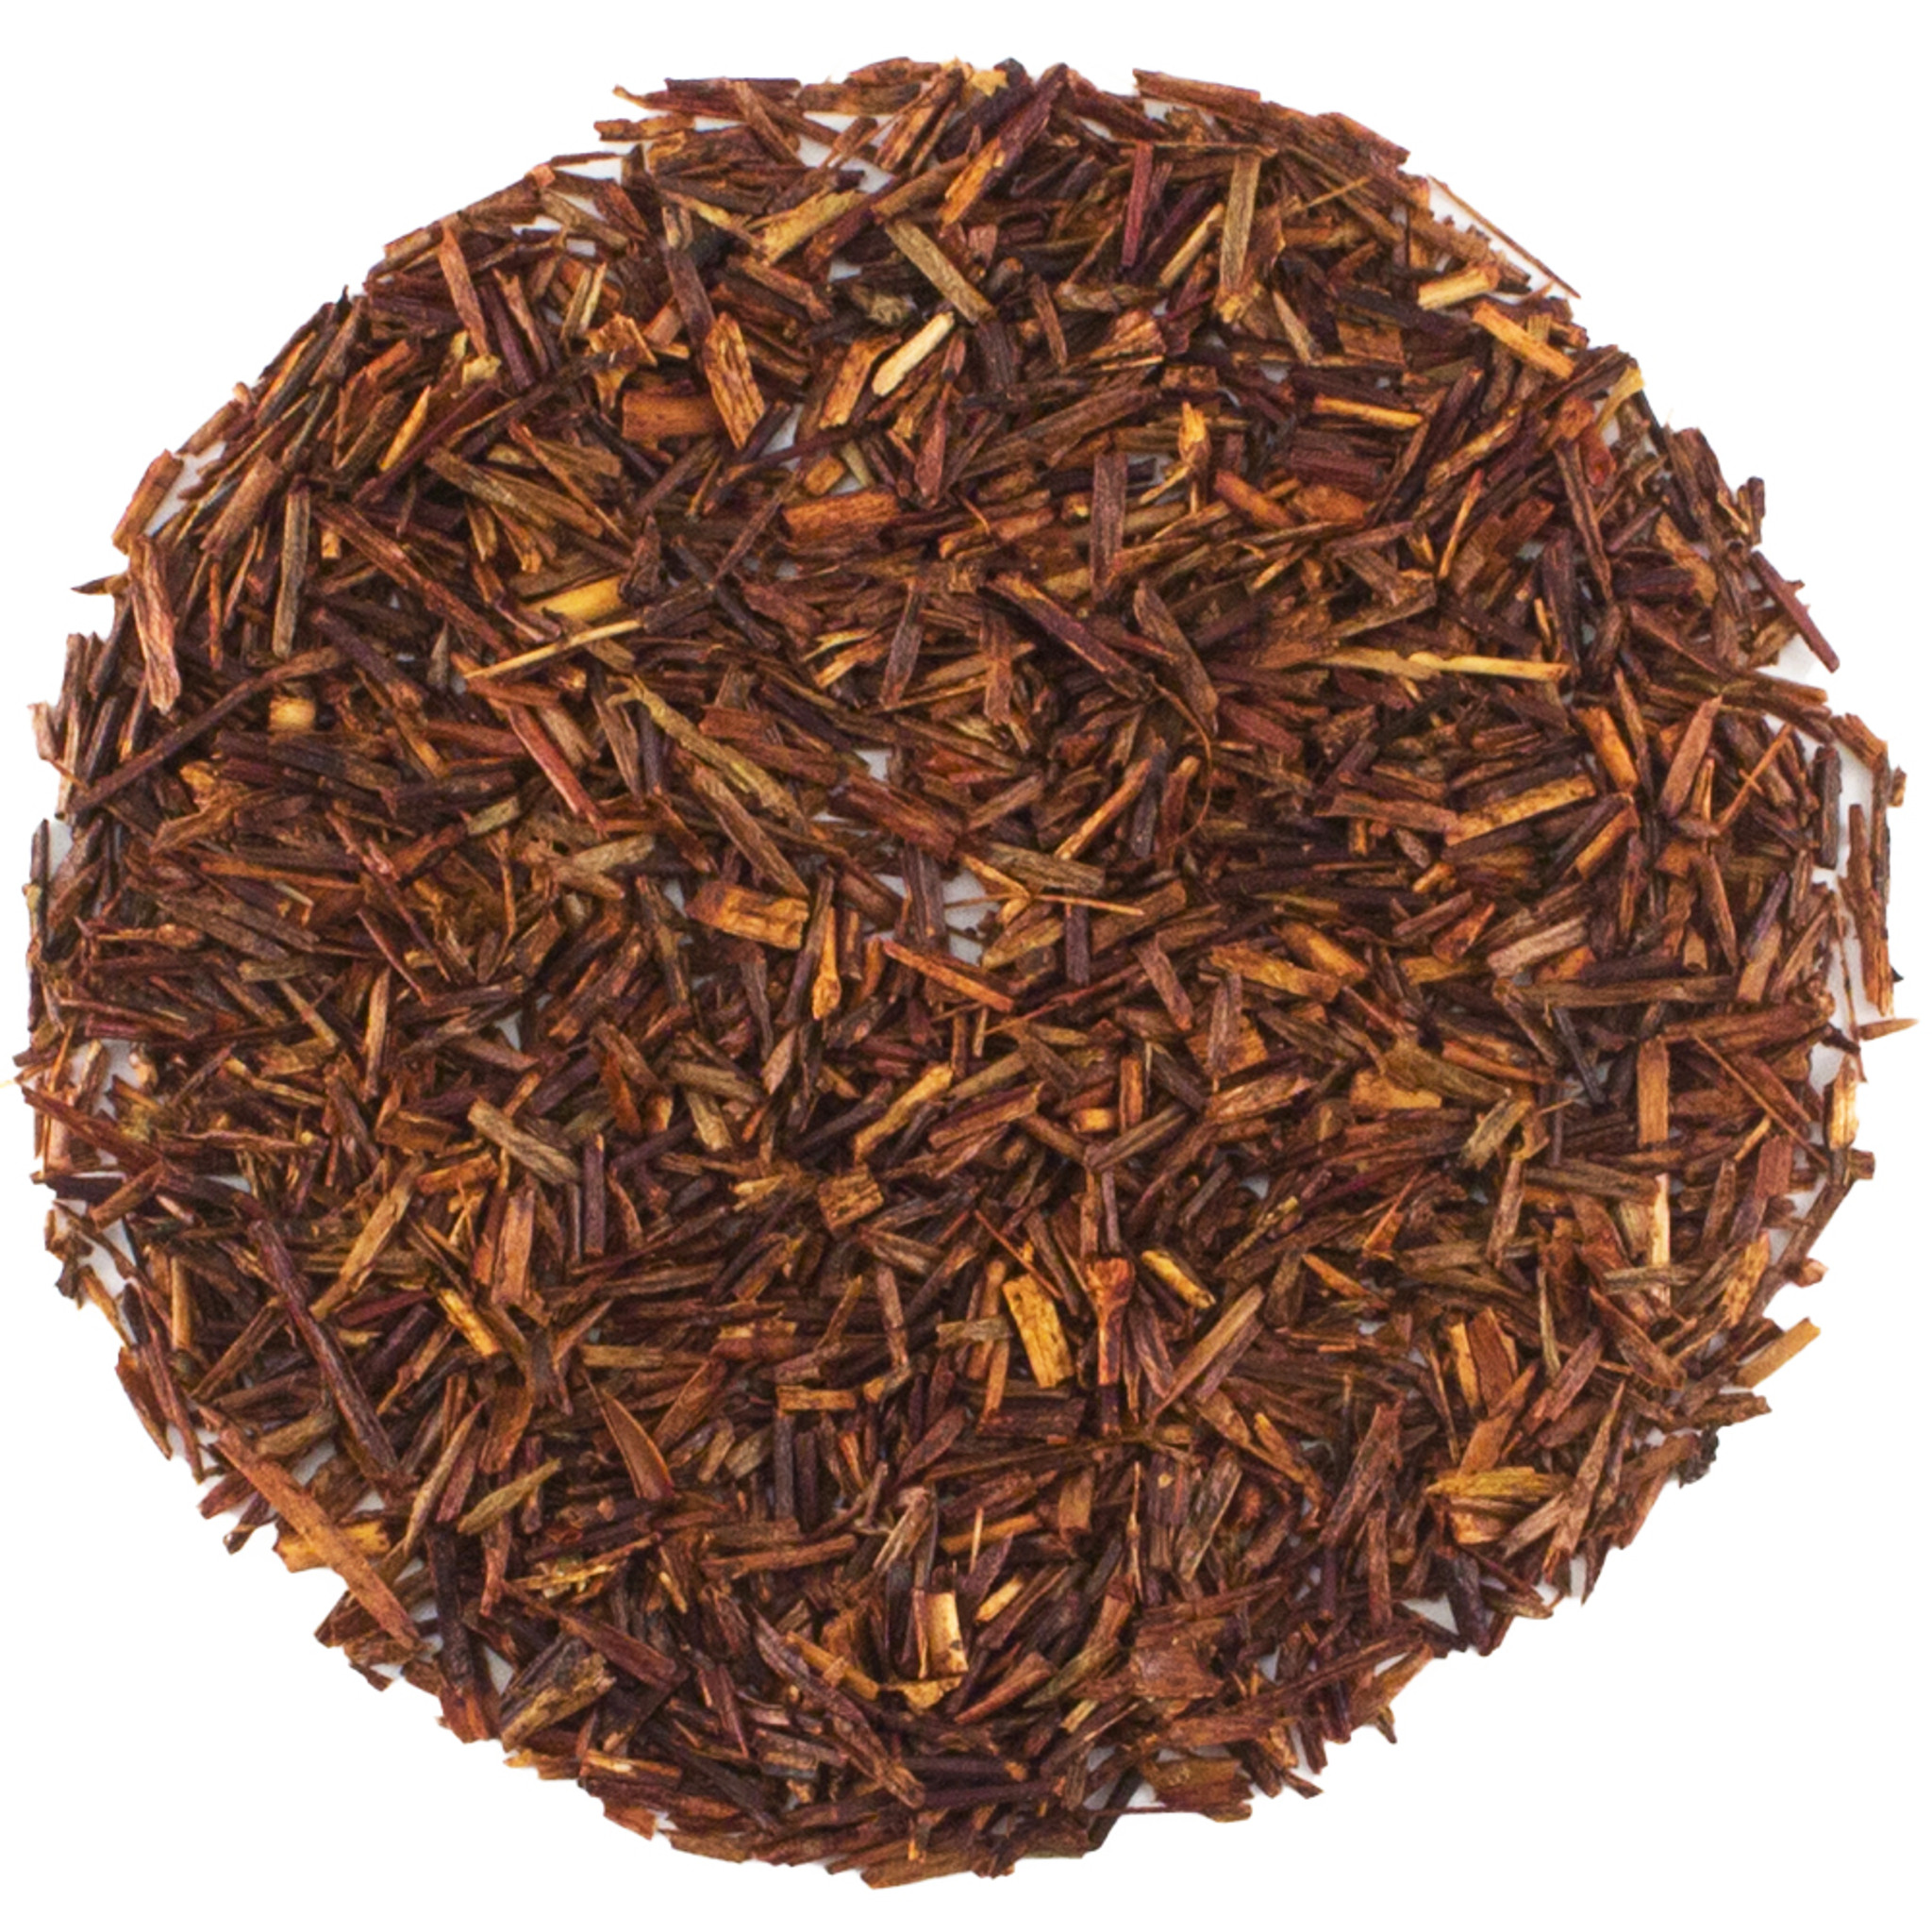 Buy Organic Loose Leaf Rooibos Tea at The Tea Smith